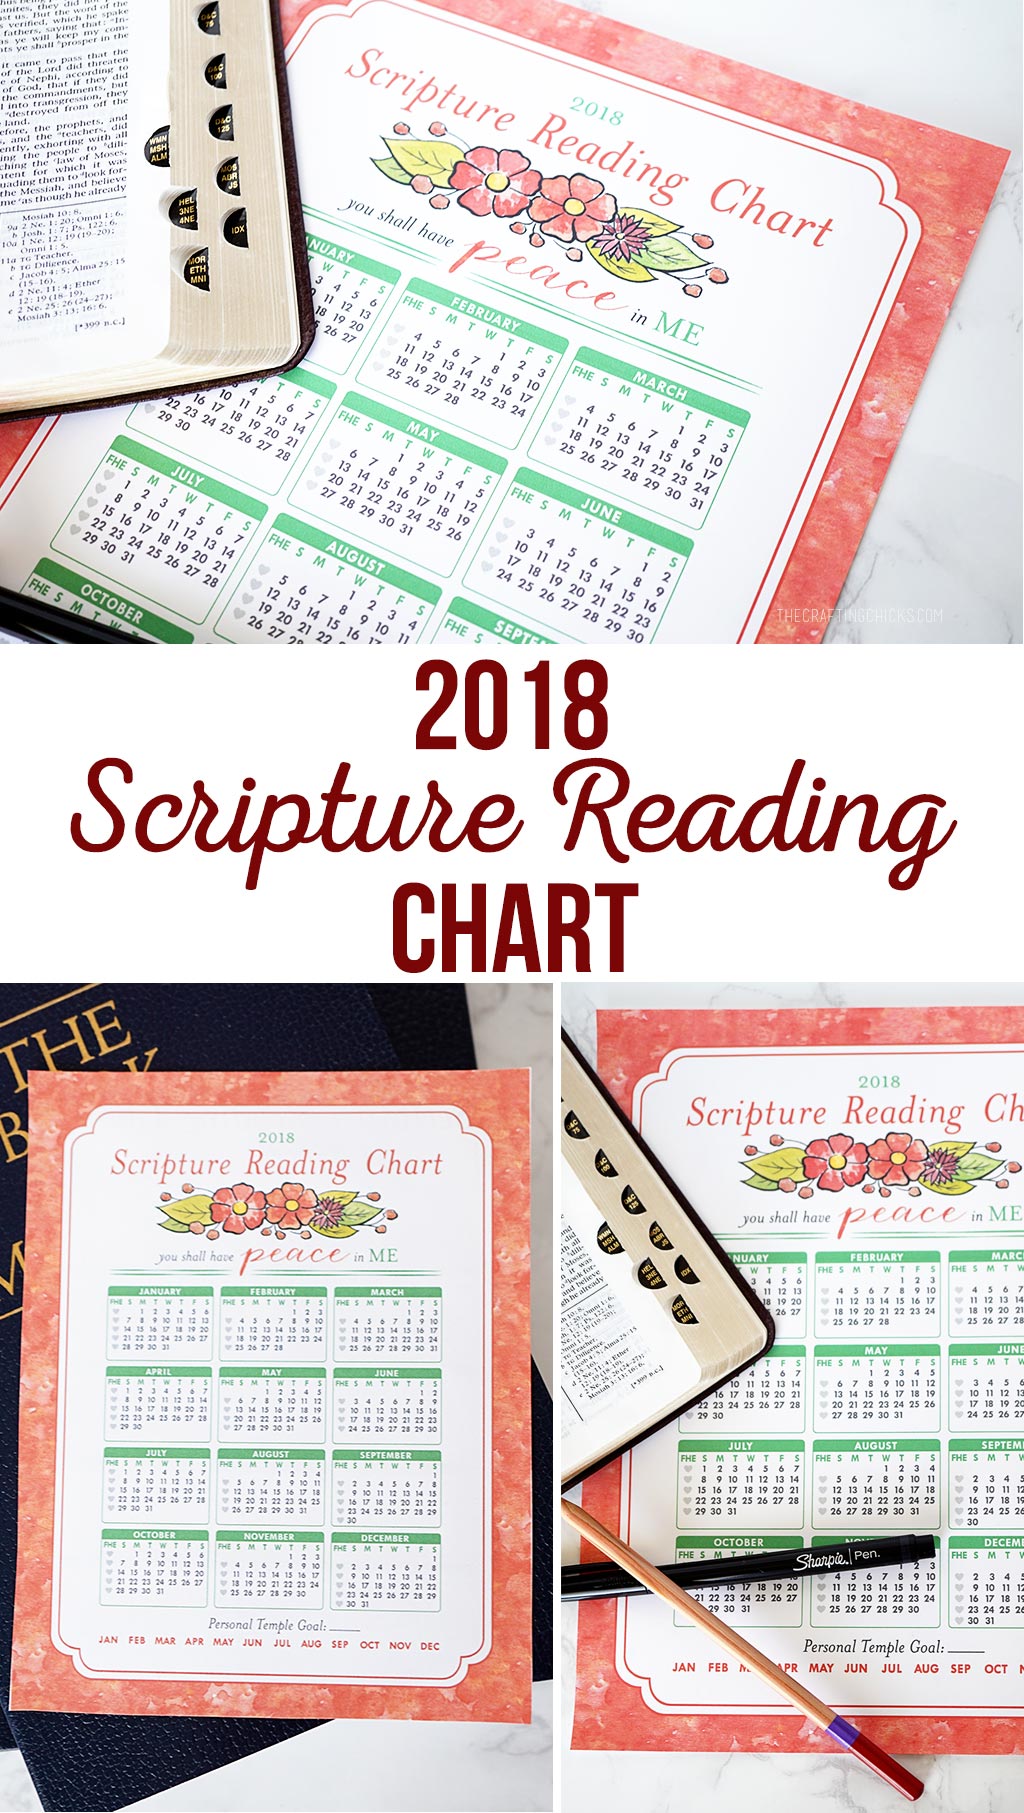 2018 Scripture Reading Chart